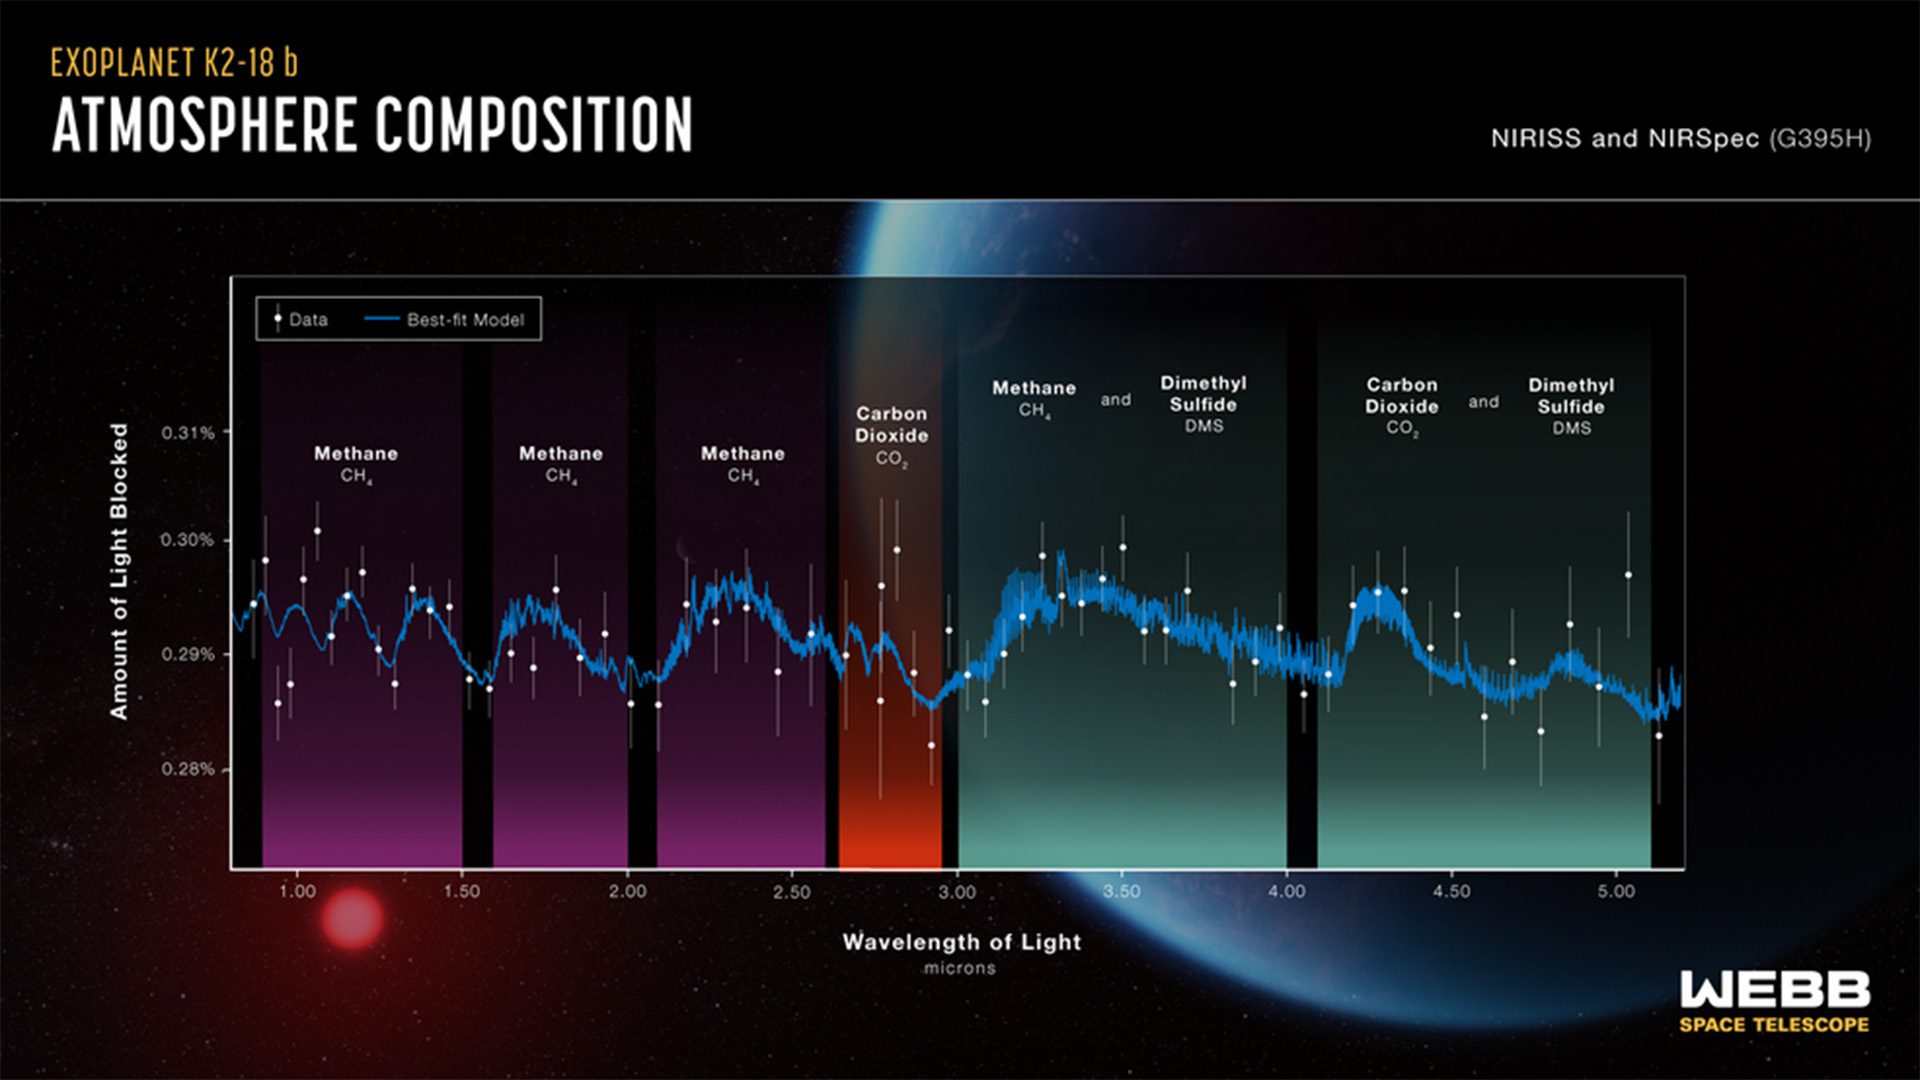 James Webb Telescope Data Spectra of K2-18 b Exoplanet